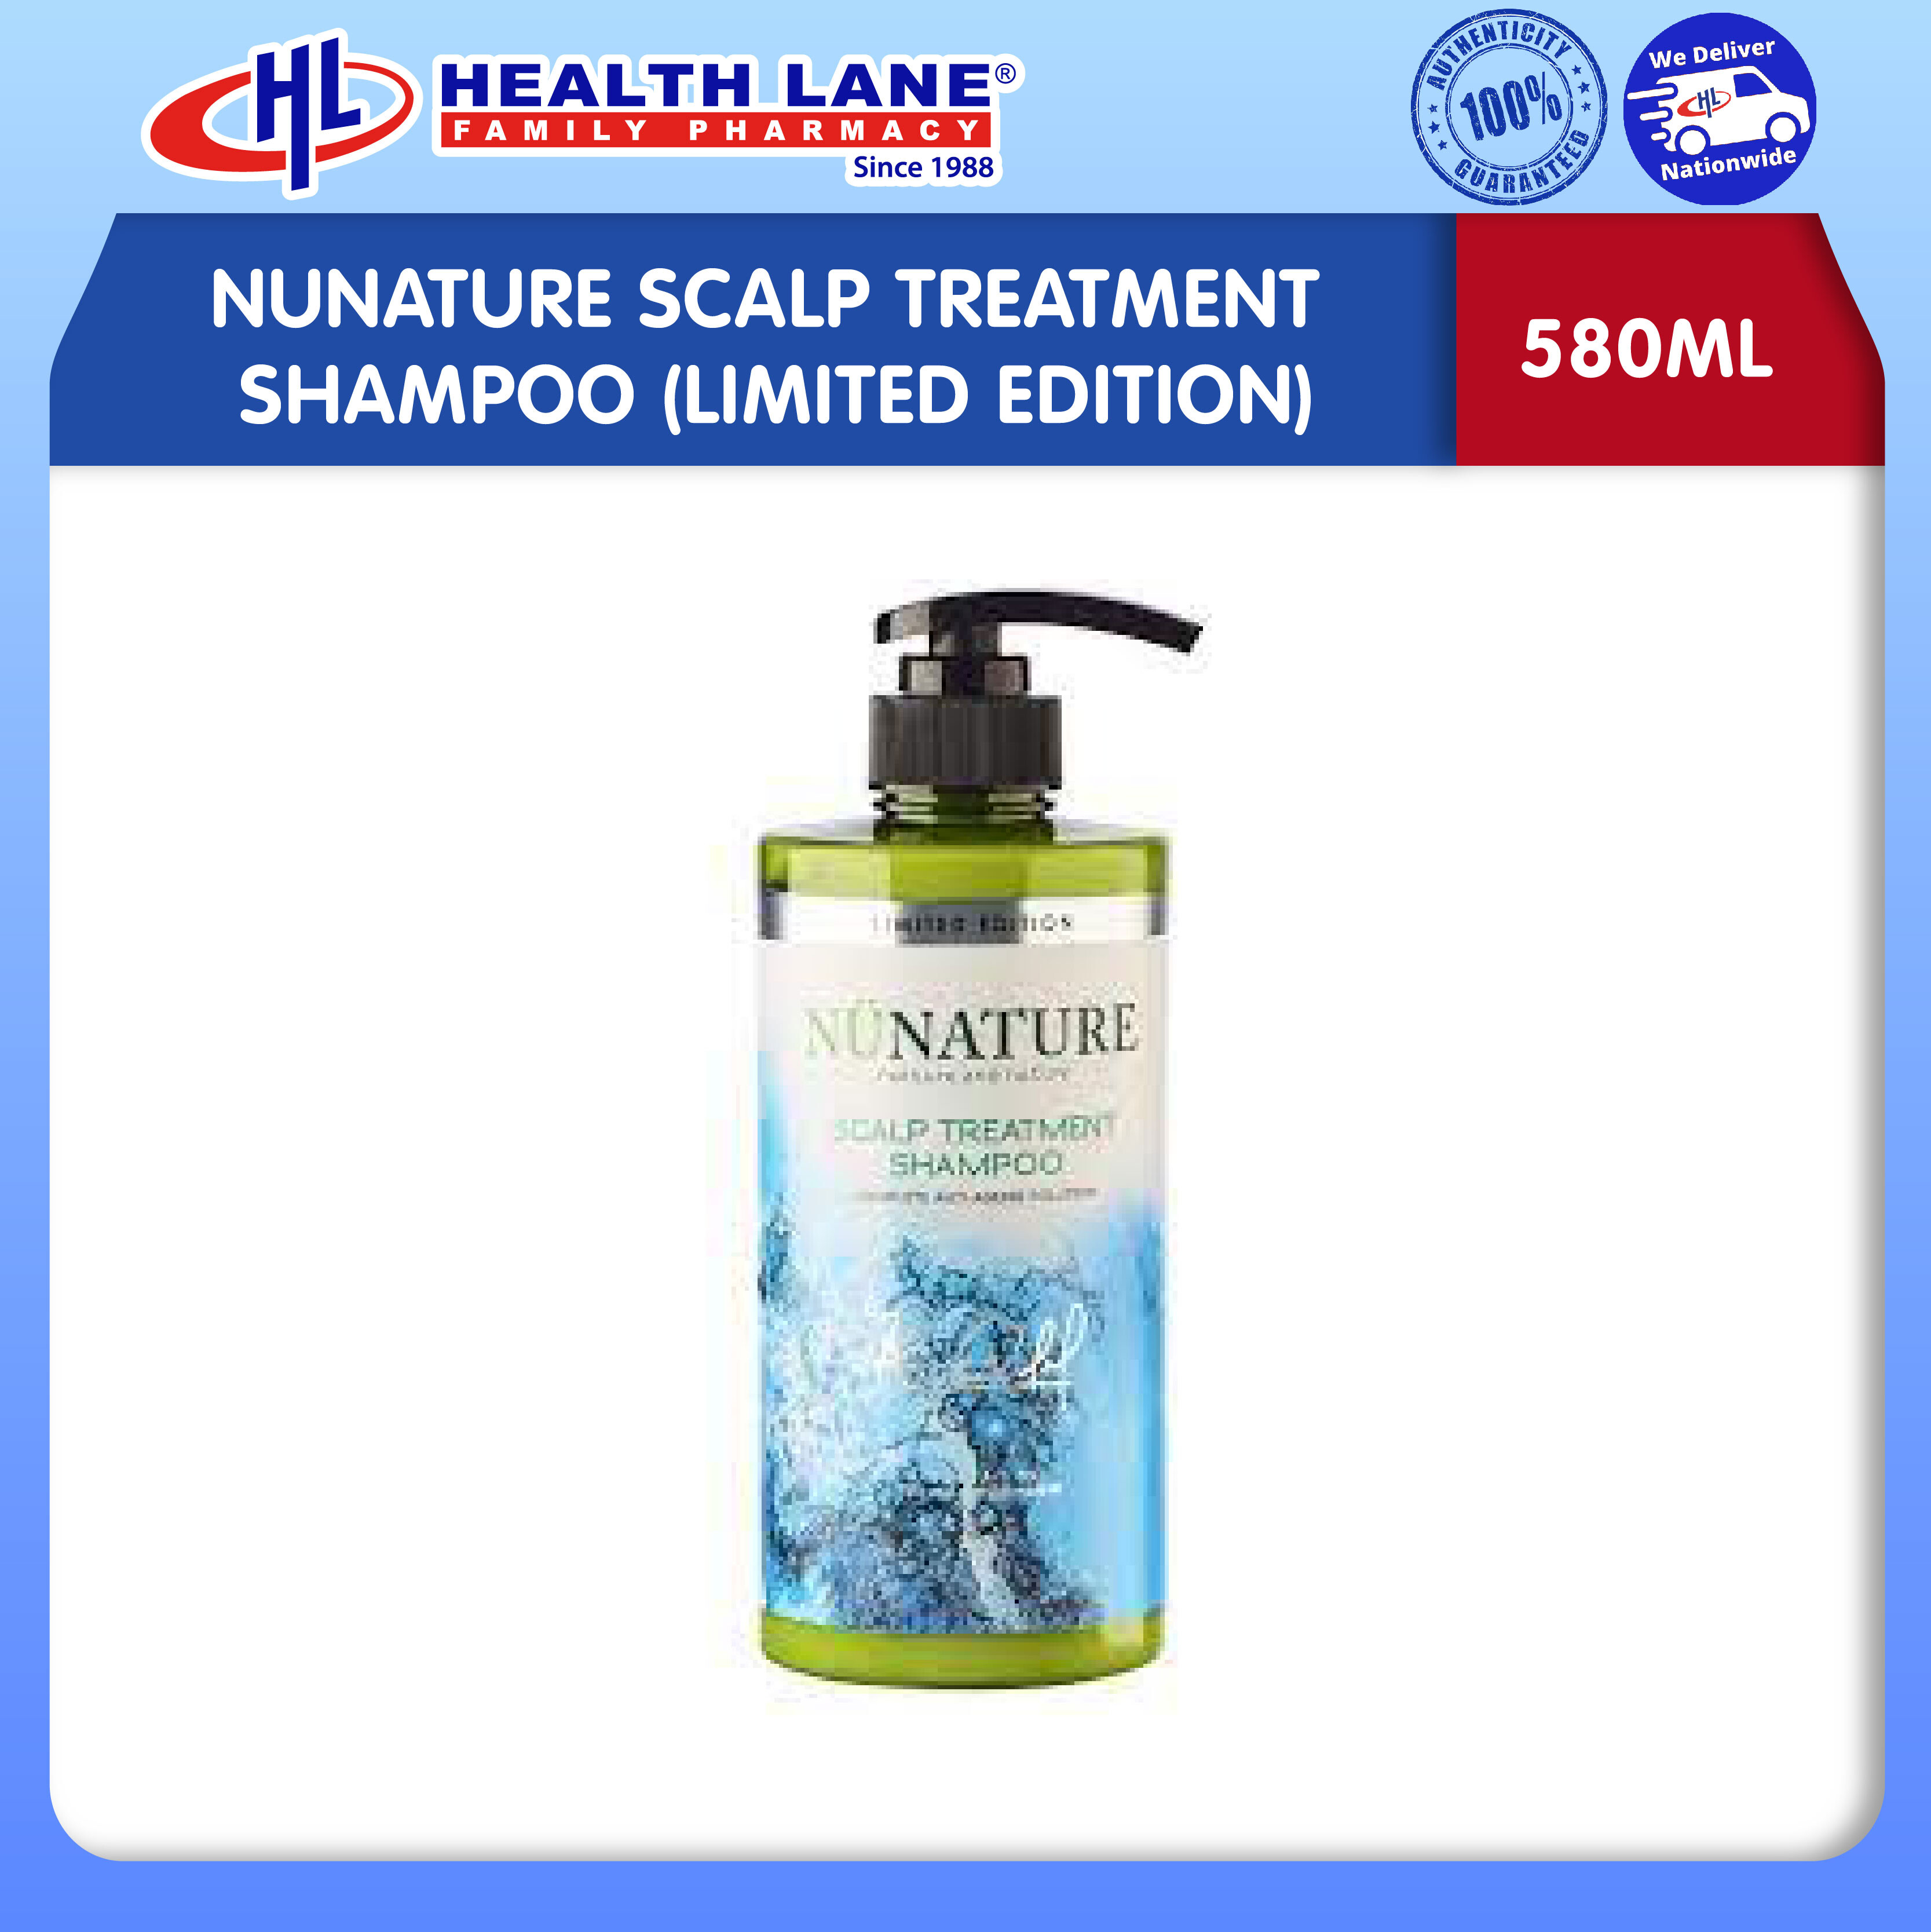 NUNATURE SCALP TREATMENT SHAMPOO- LIMITED EDITION (580ML)